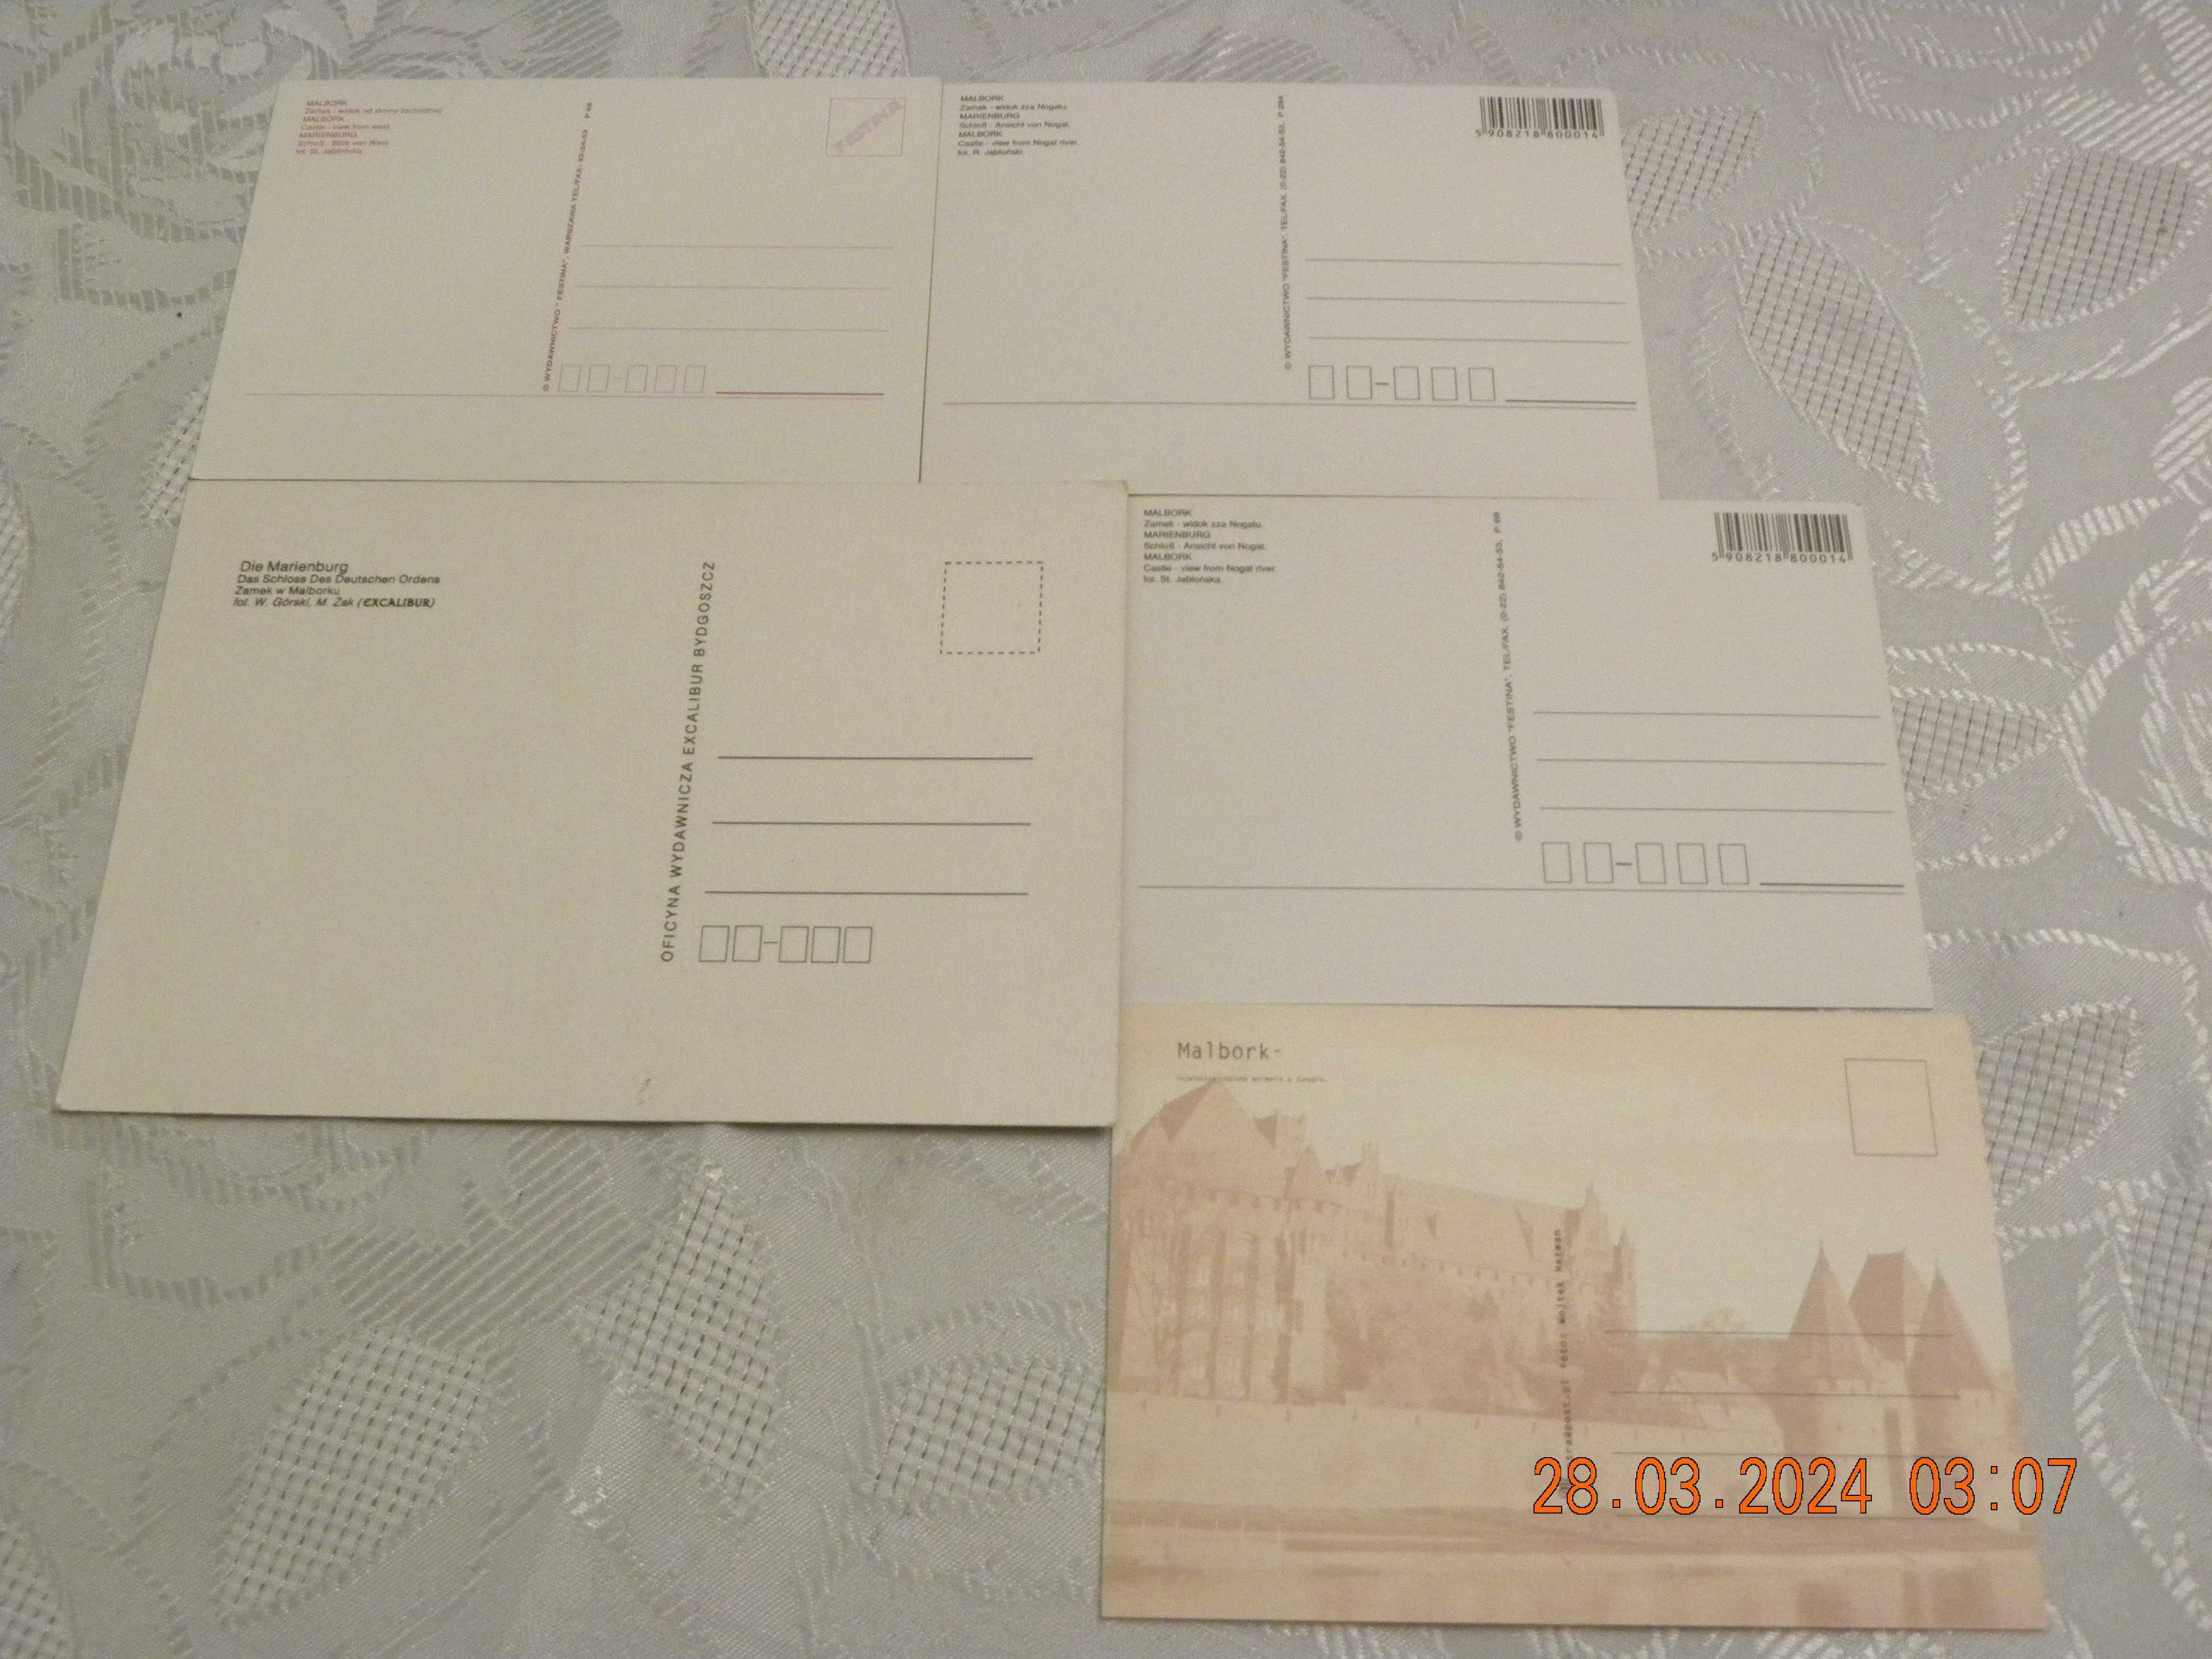 Pocztówki z Malborka - zestaw